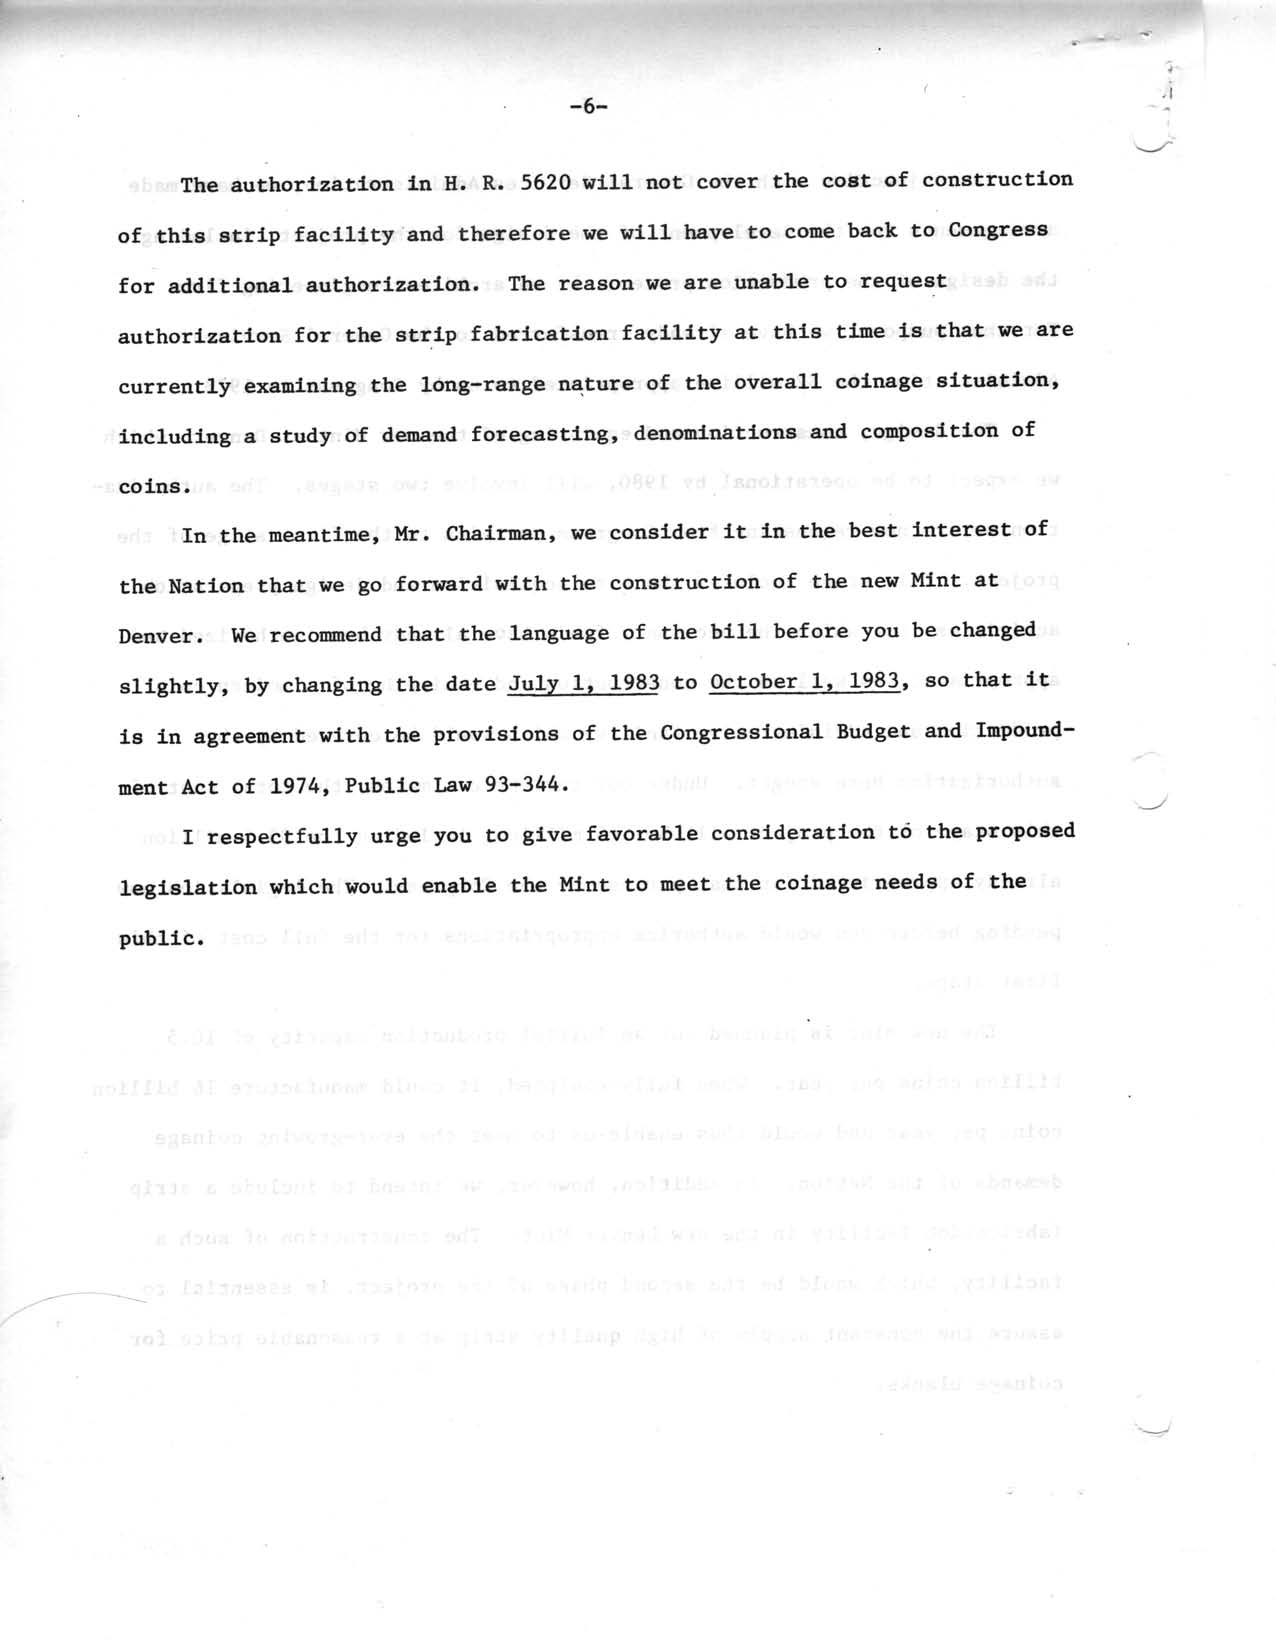 Historic Press Release: Brooks' Statement New Denver Mint, Page 6